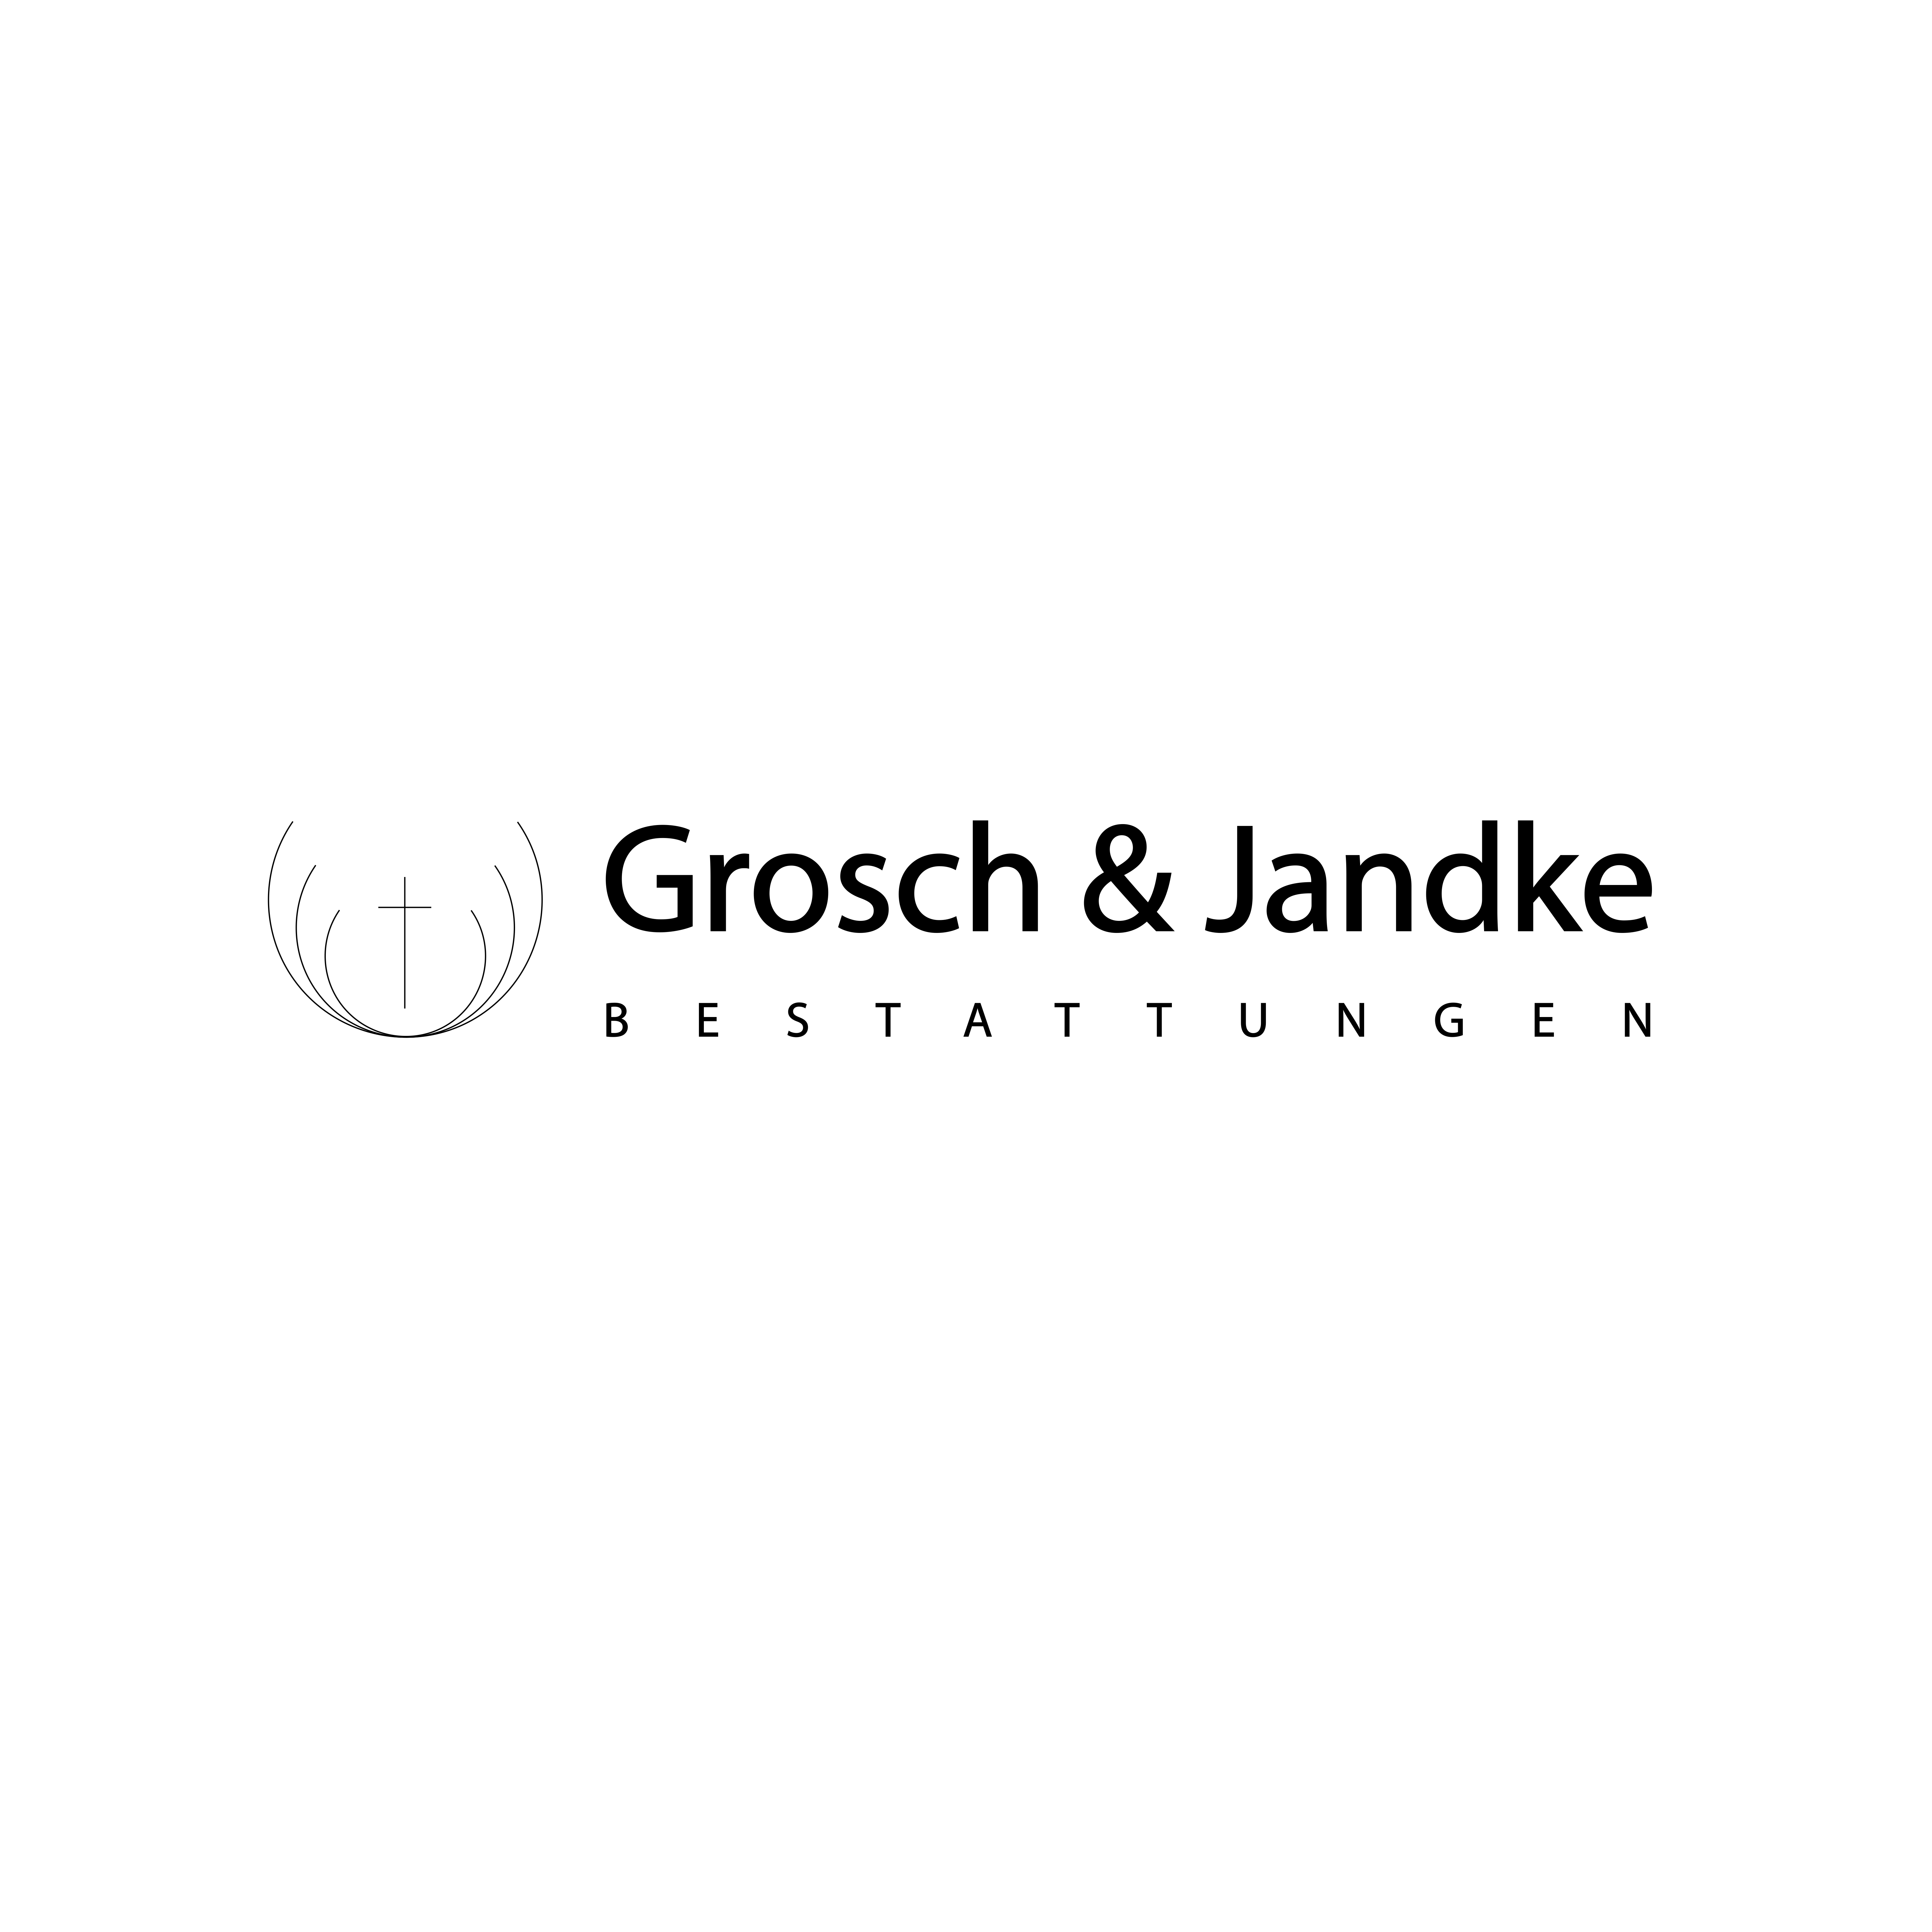 Grosch & Jandke Bestattungen GbR Logo